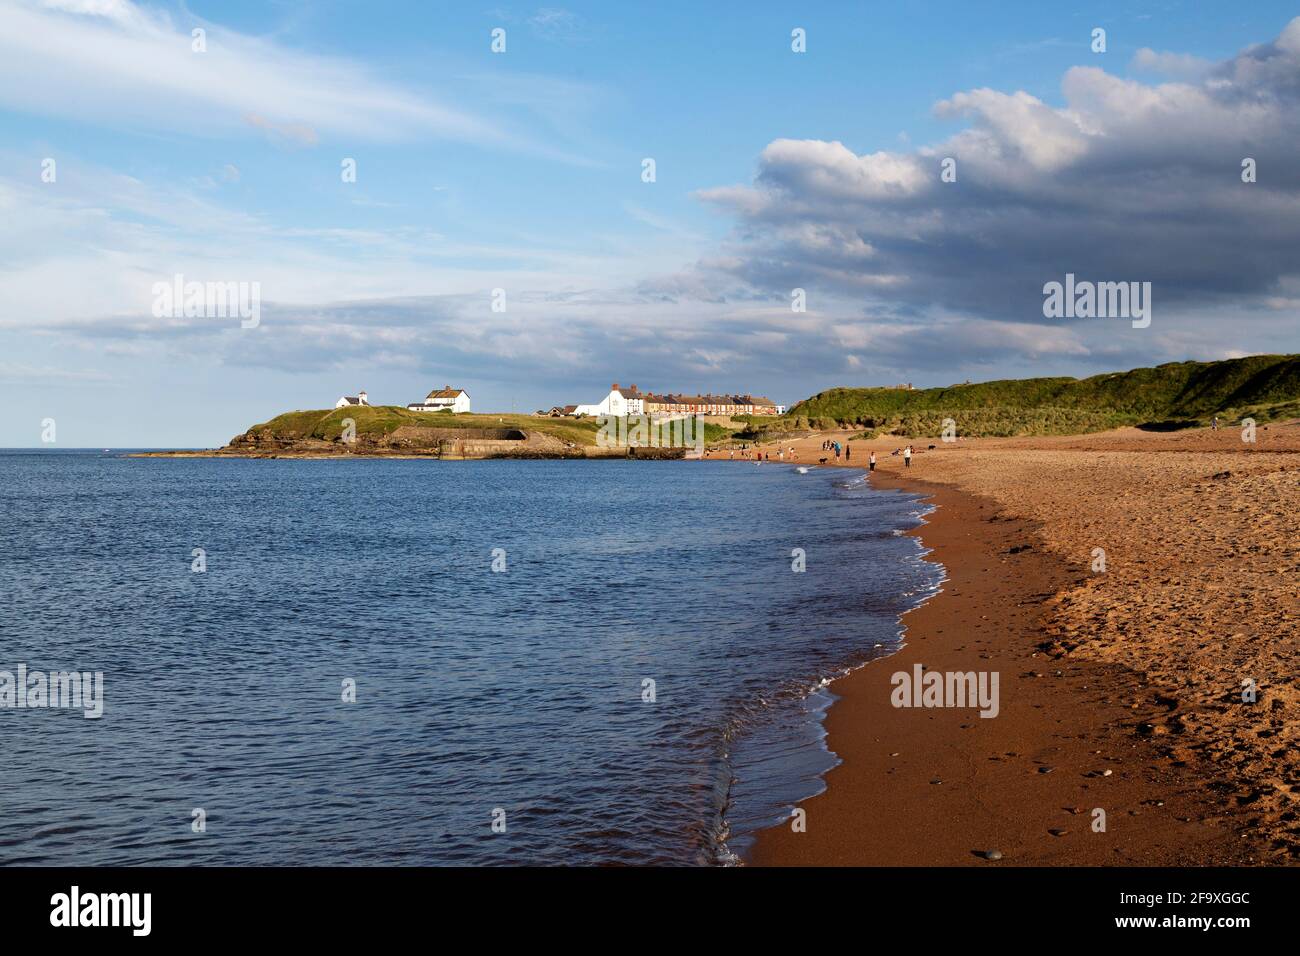 The North Sea coast at Seaton Sluice in Northumberland, England. The sea is calm. Stock Photo